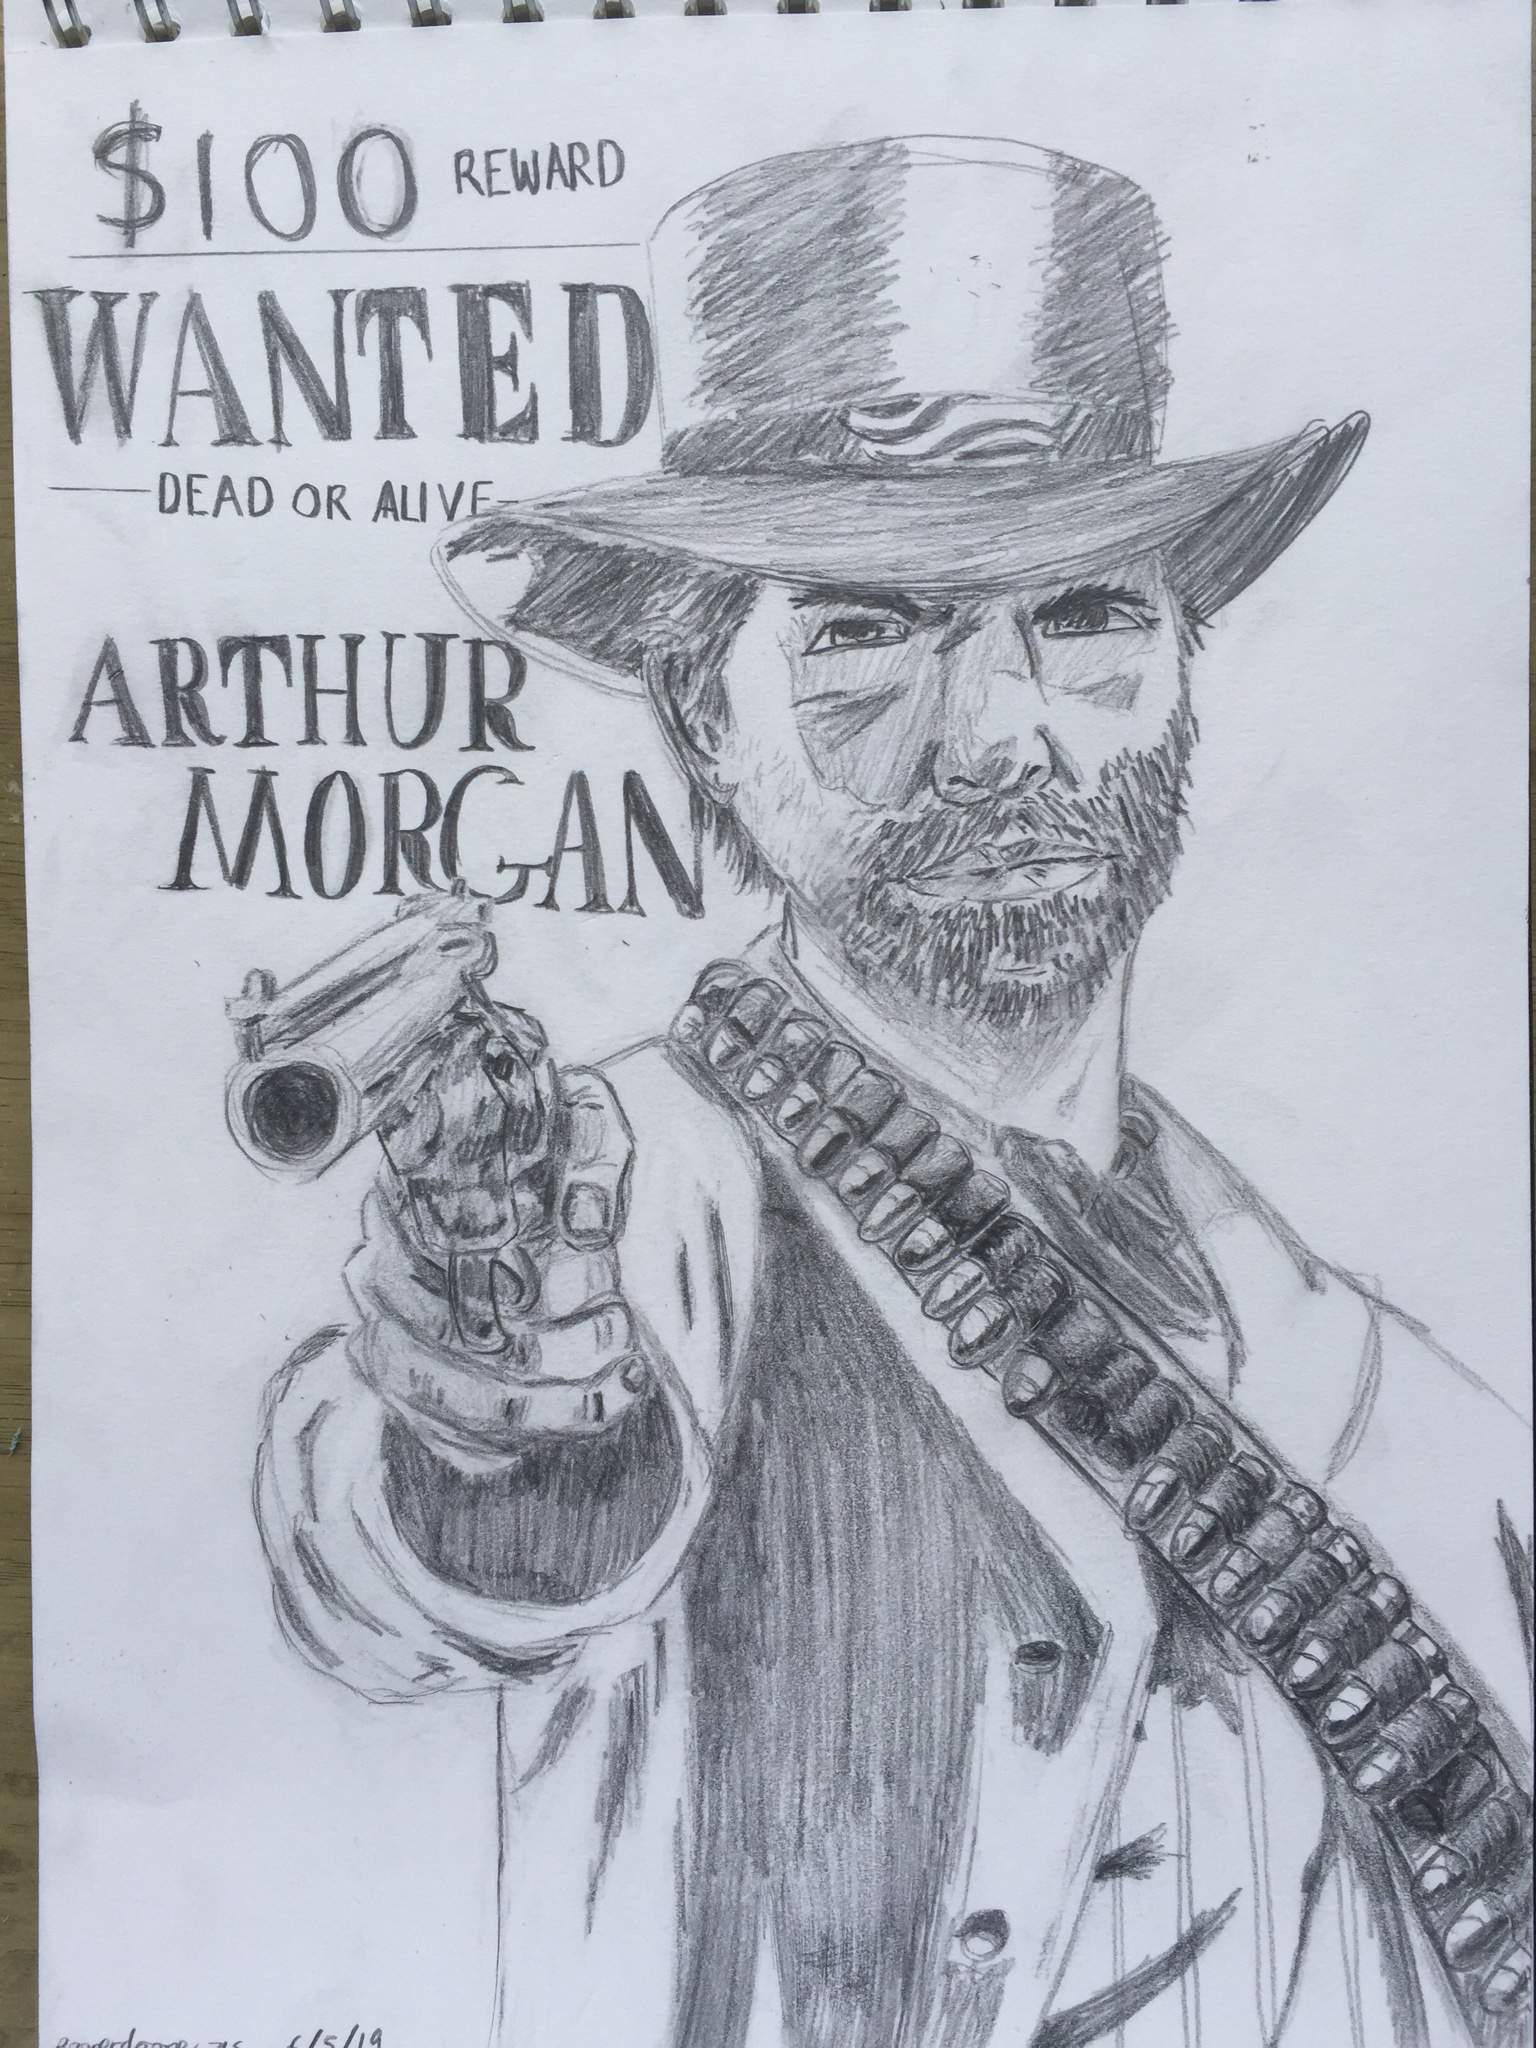 Arthur Morgan bounty poster The Red Dead Redemption Amino.